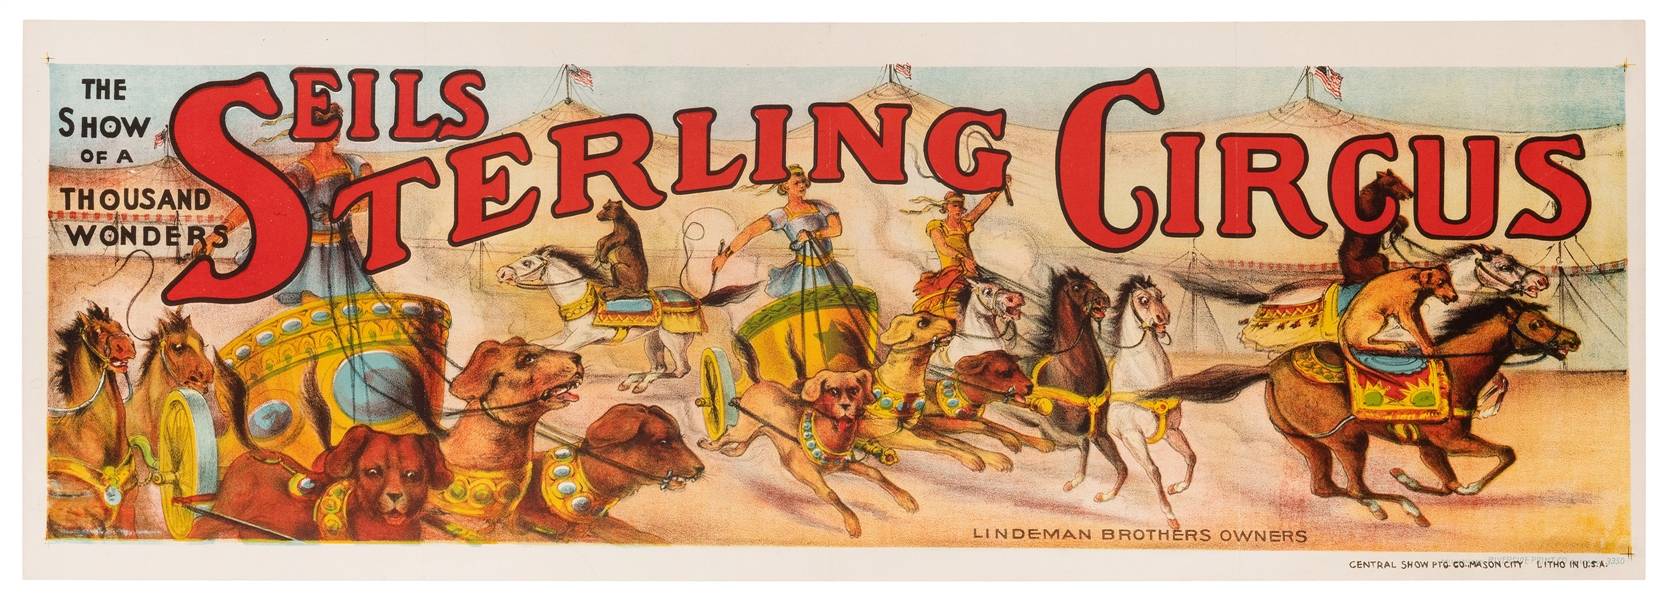  Seils-Sterling Circus. [Equestrians]. Chicago/Milwaukee: Ri...